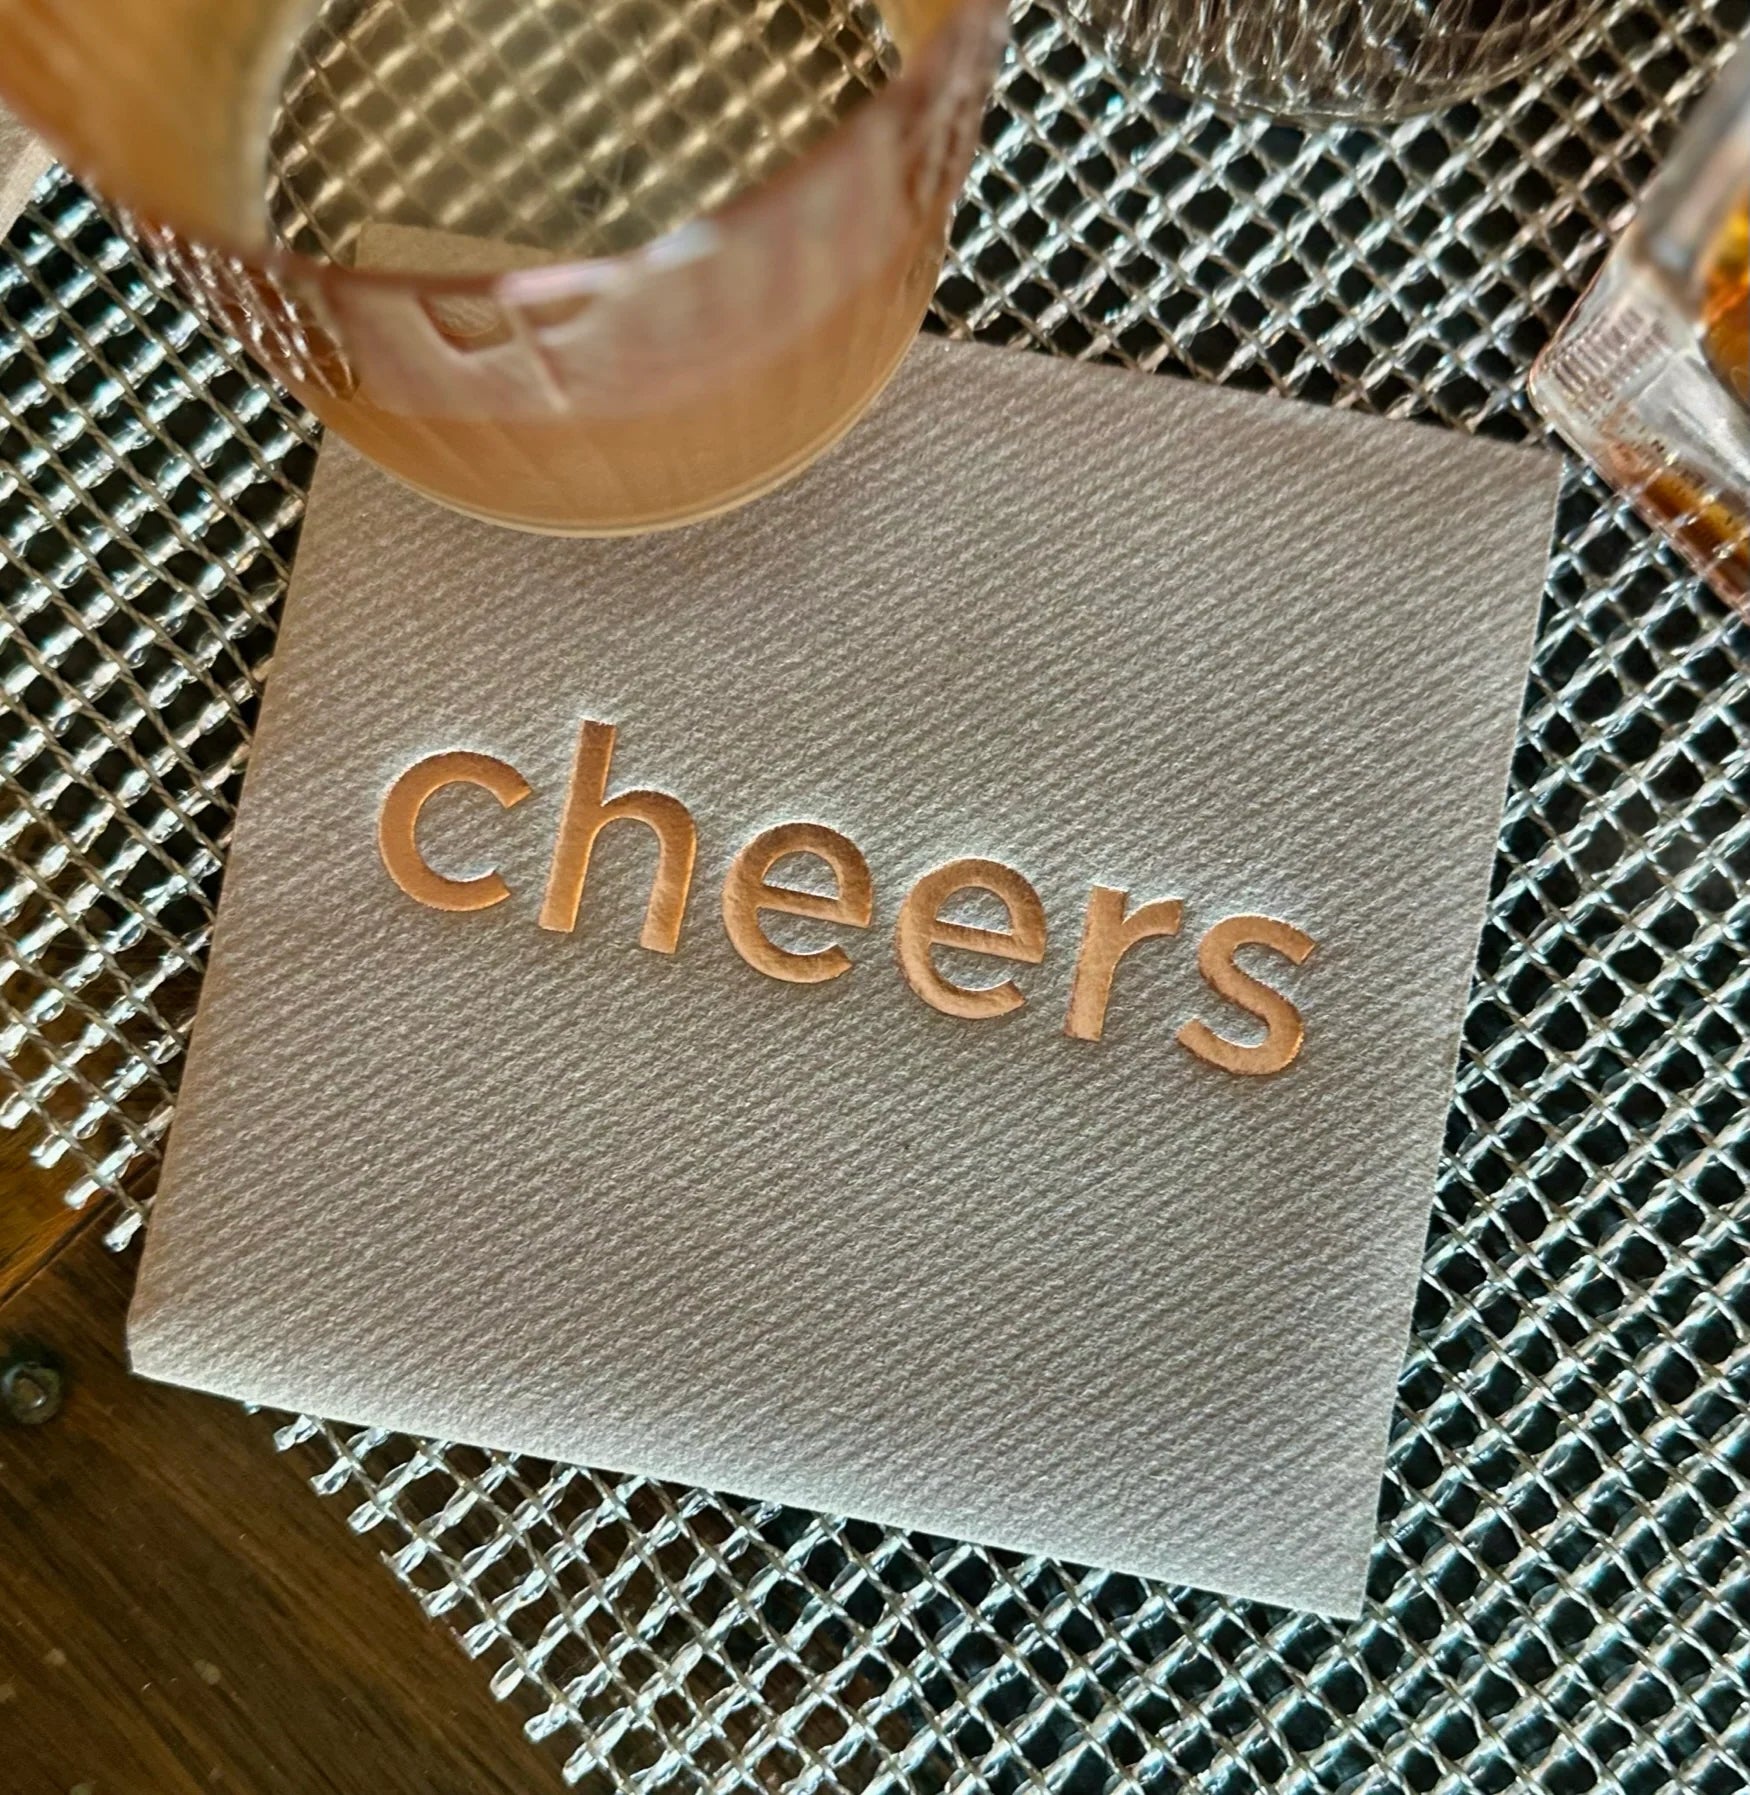 Cocktail Napkin + Brass Tray Hostess Set - Cheers (Putty)